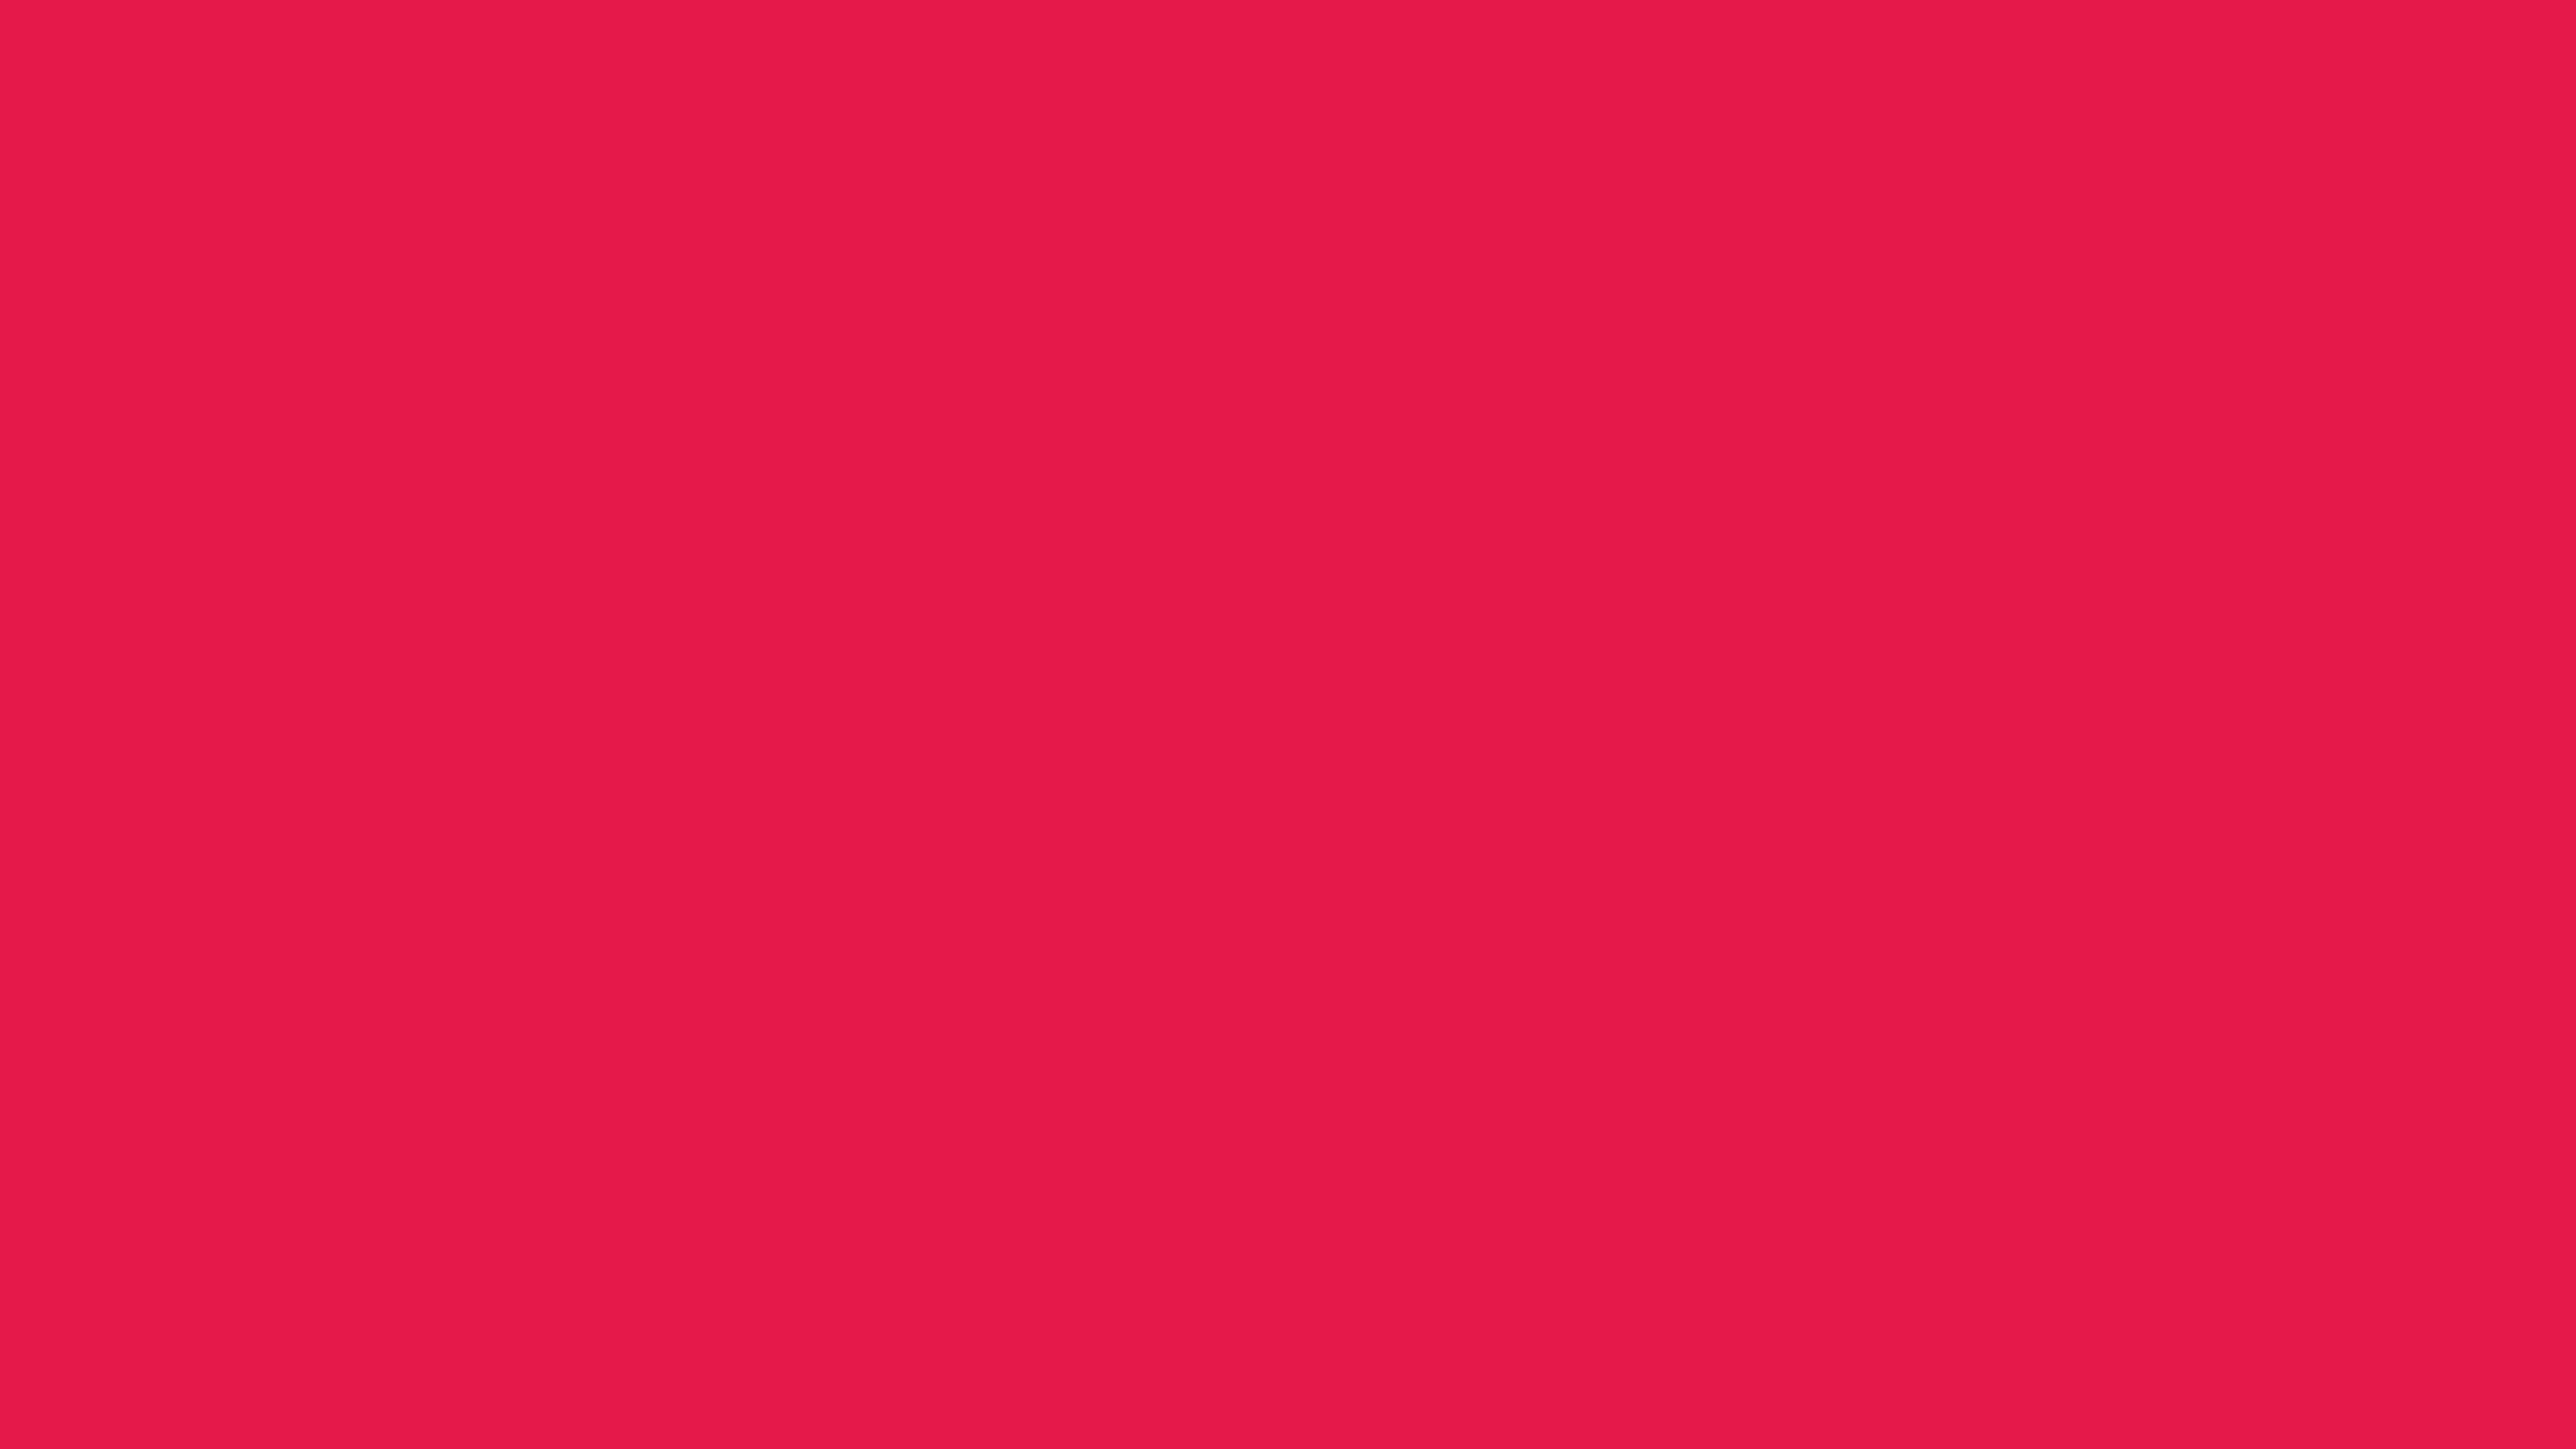 3840x2160 Spanish Crimson Solid Color Background